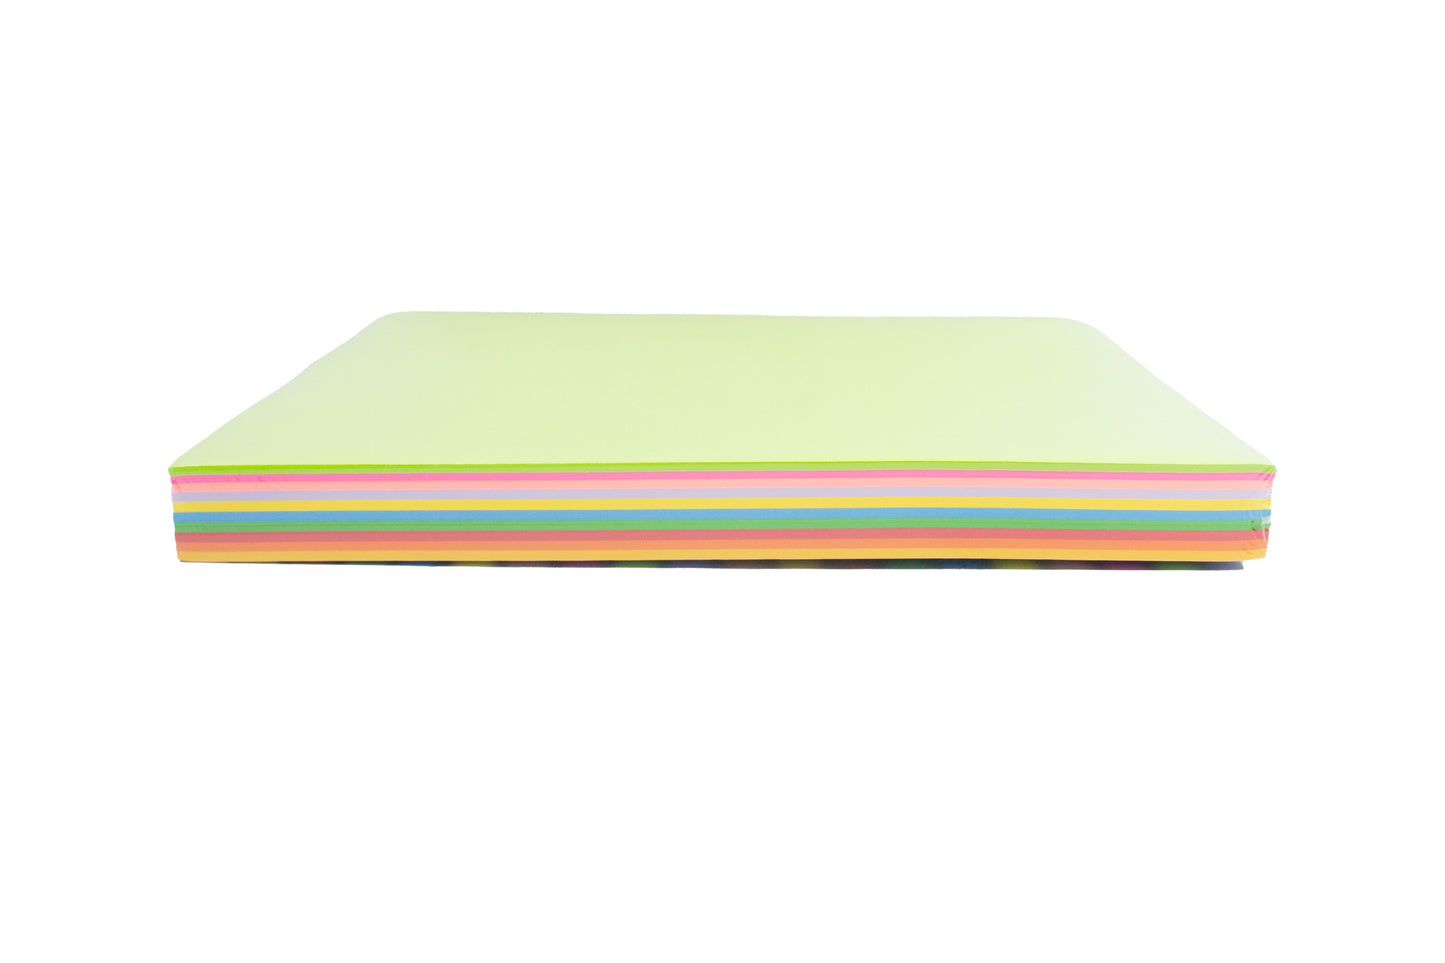 Avia Multicolored Paper 80gsm